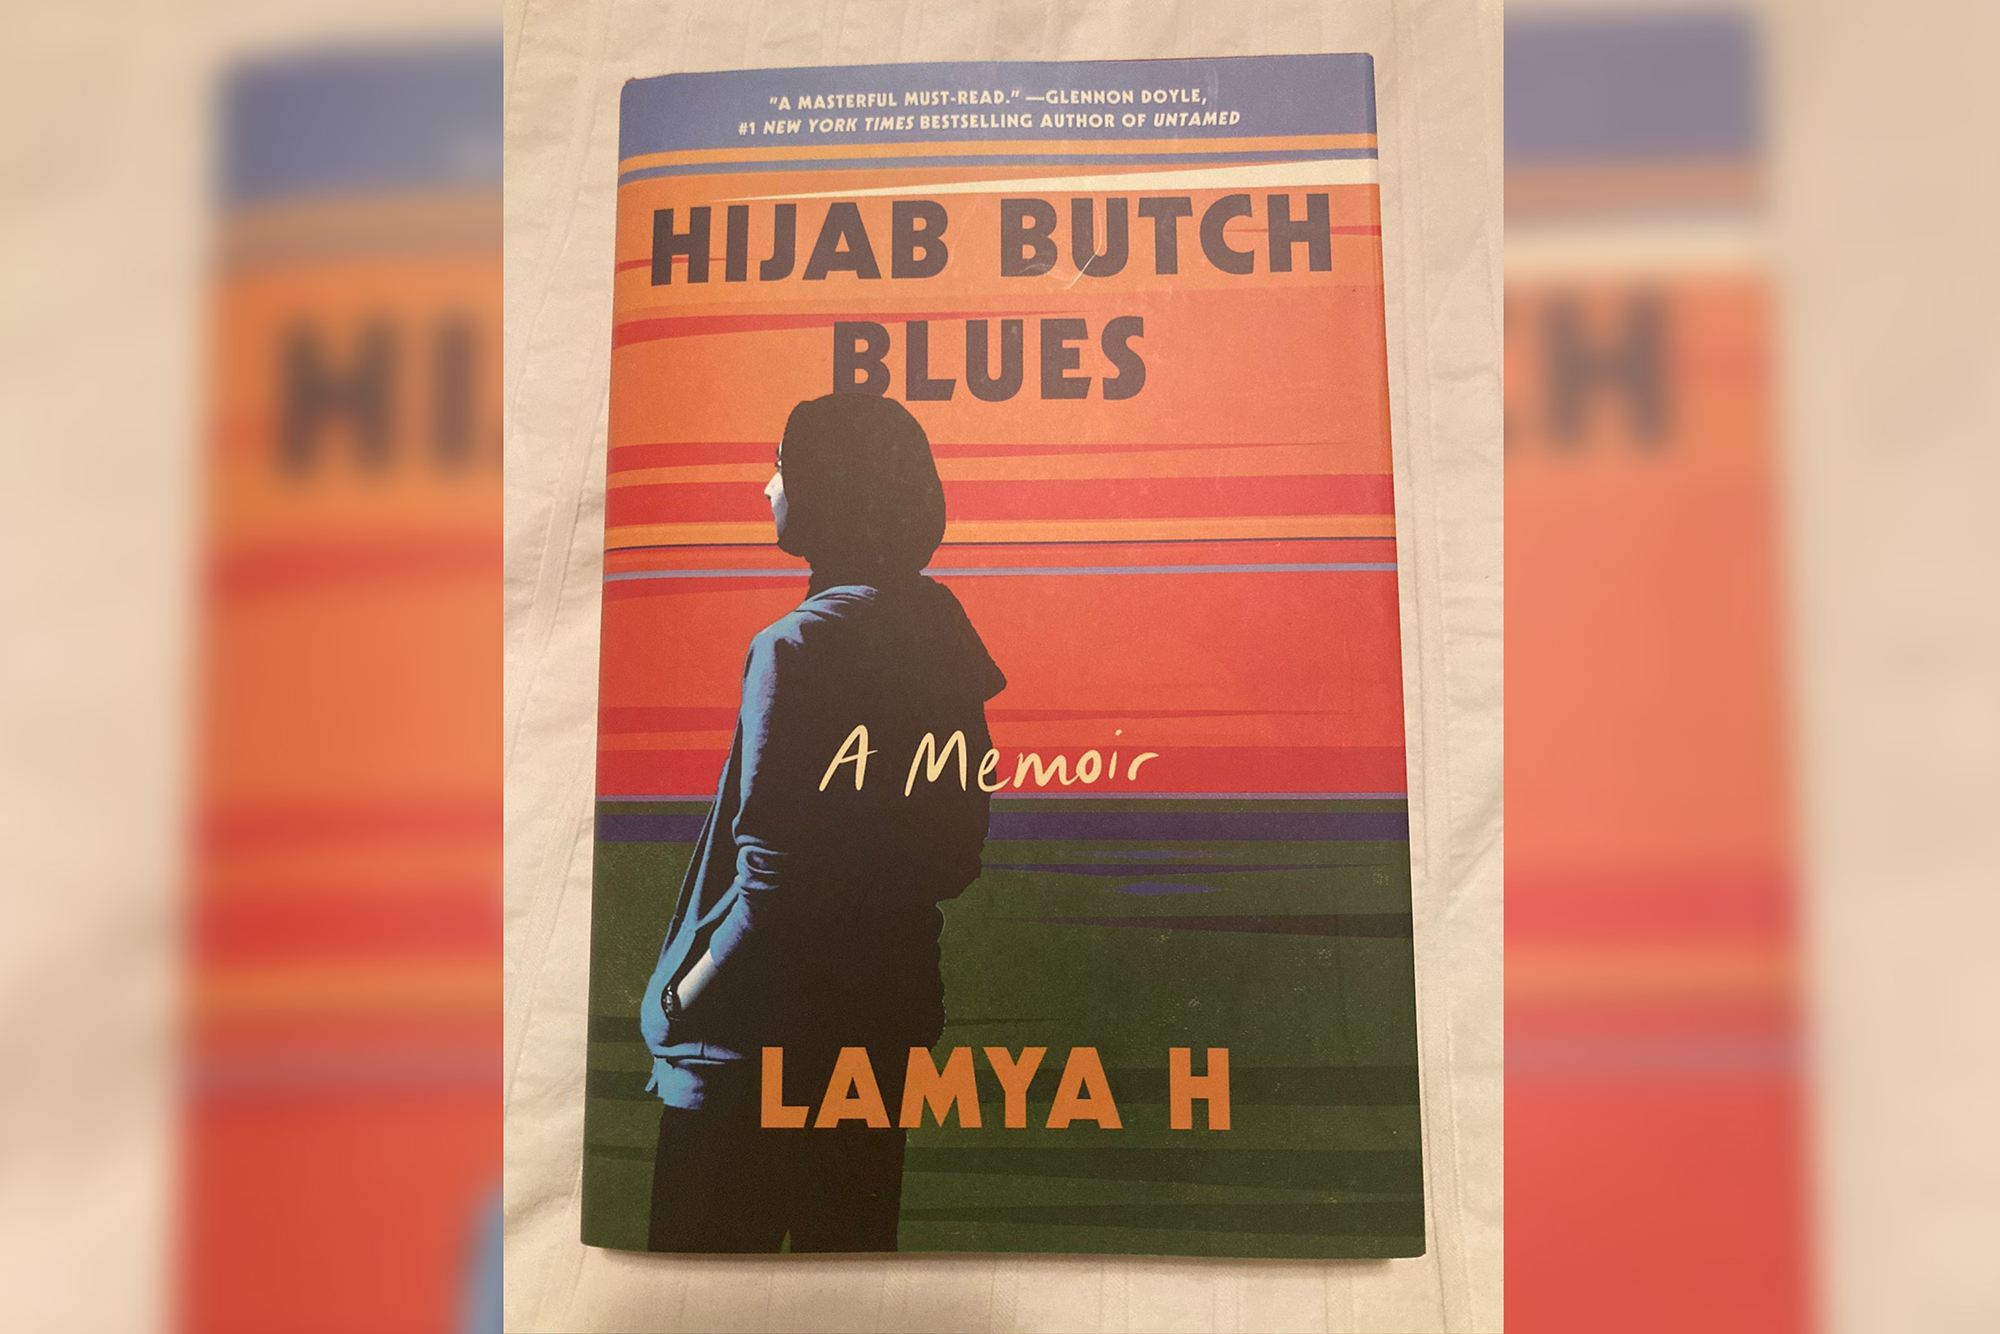 A copy of Hijab Butch Blues by Lamya H